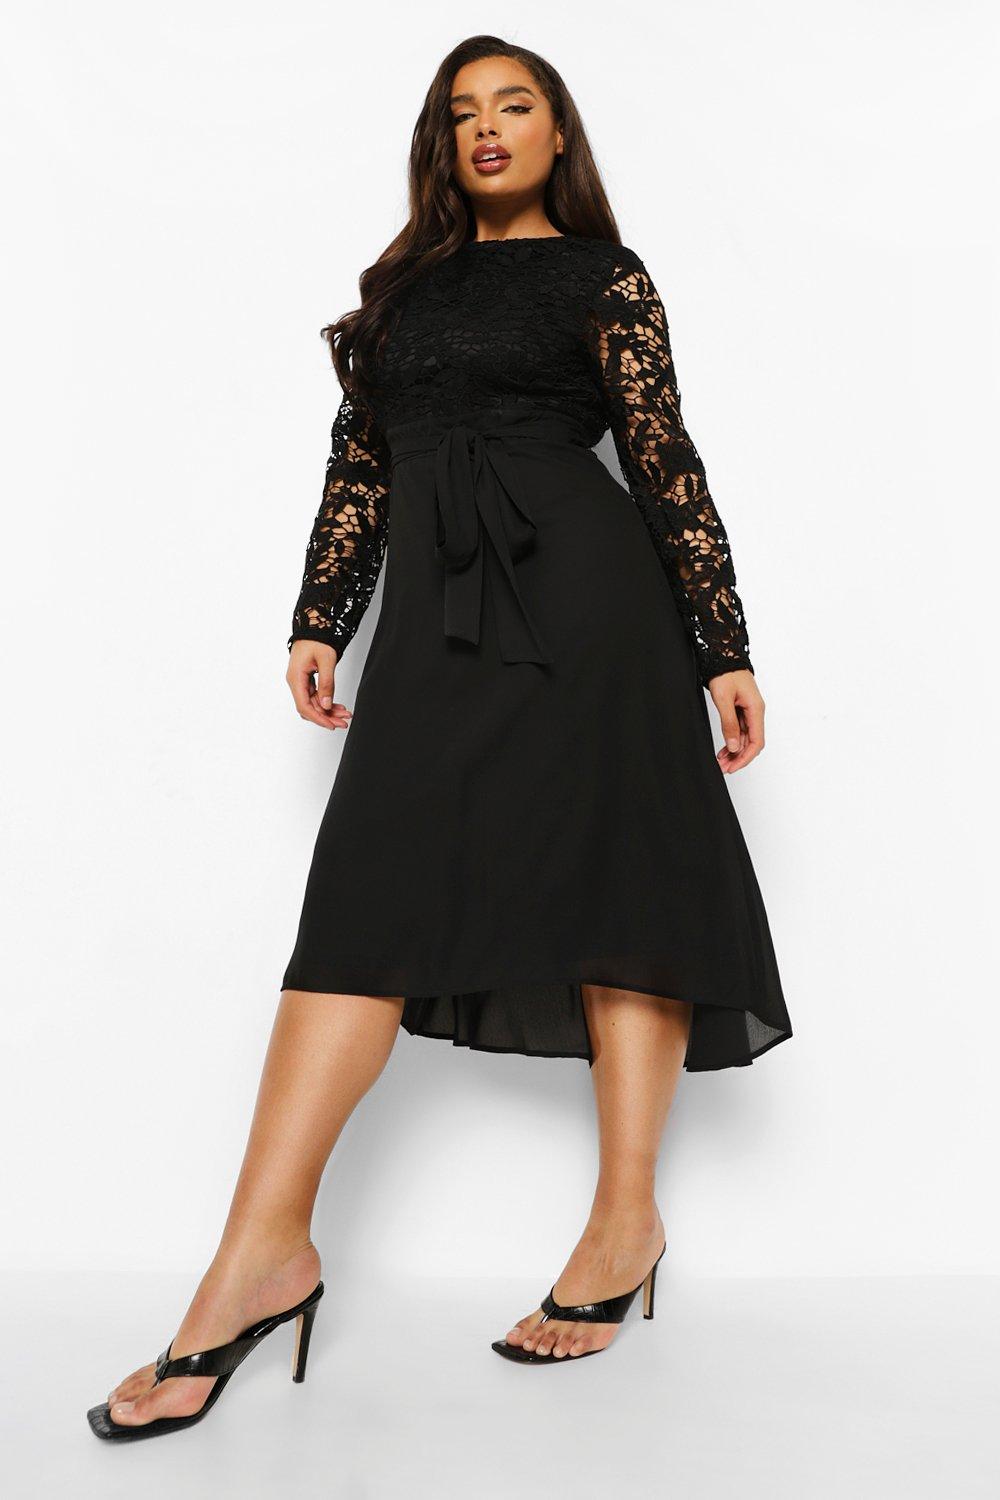 Black Lace Dresses | Long Sleeve Black ...